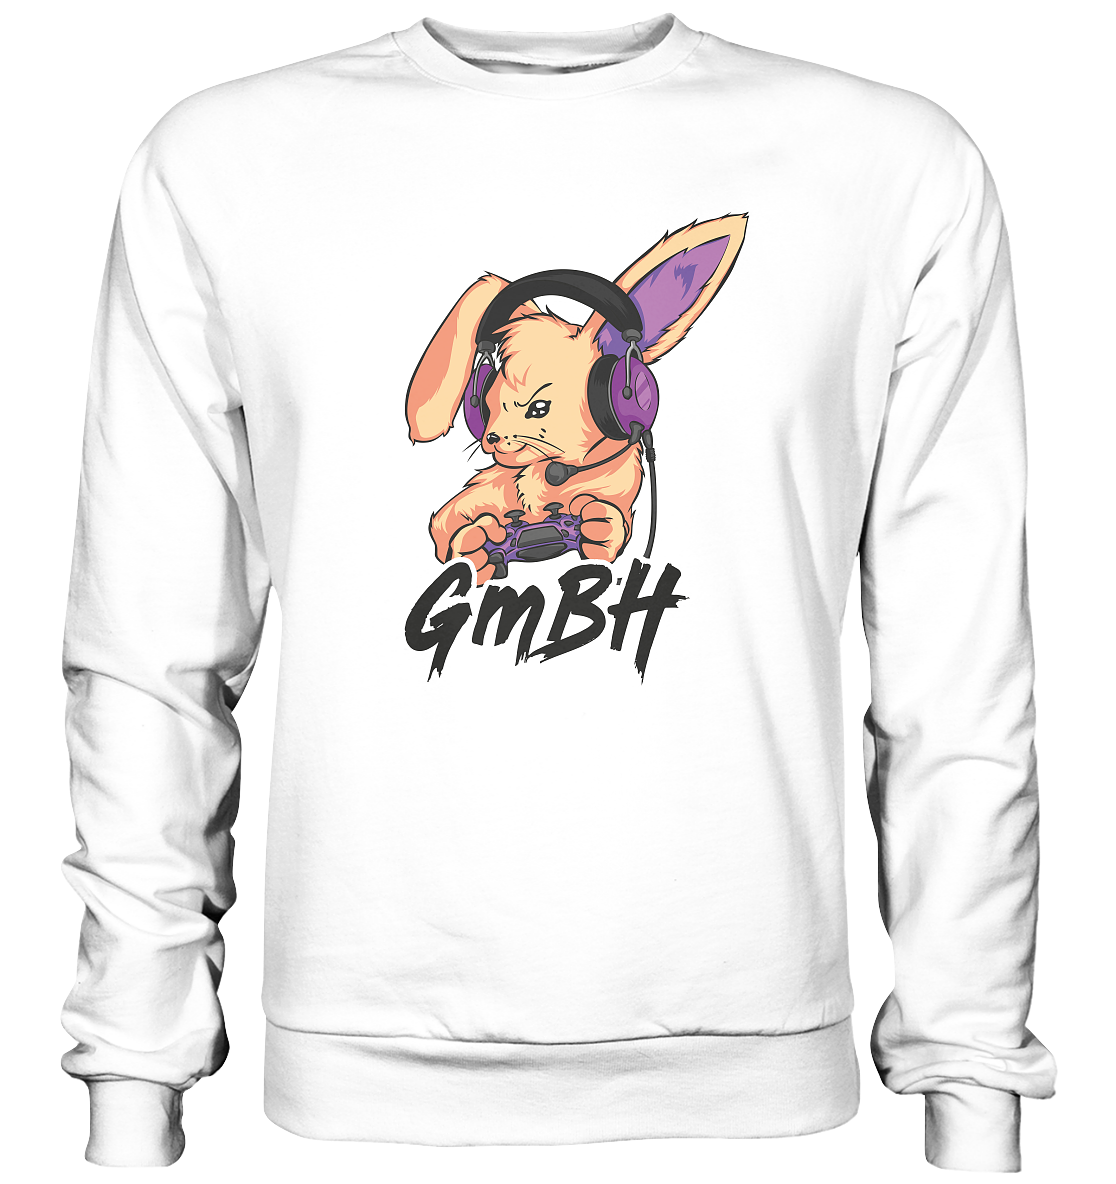 GMBH - Basic Sweatshirt